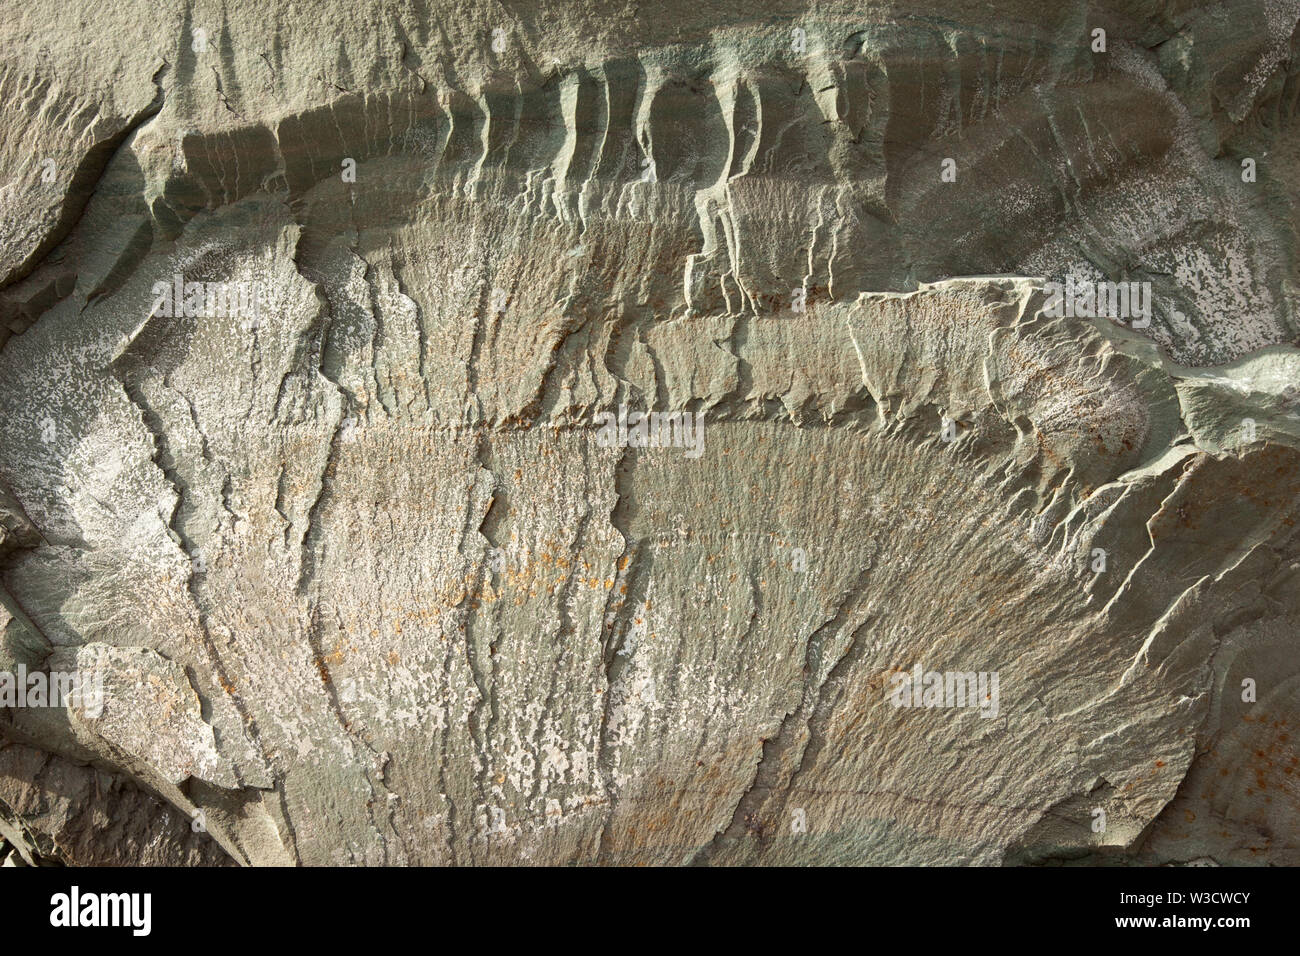 plumose fracture in argillite (slightly metamorphosed mudstone). About 1 meter across. Stock Photo